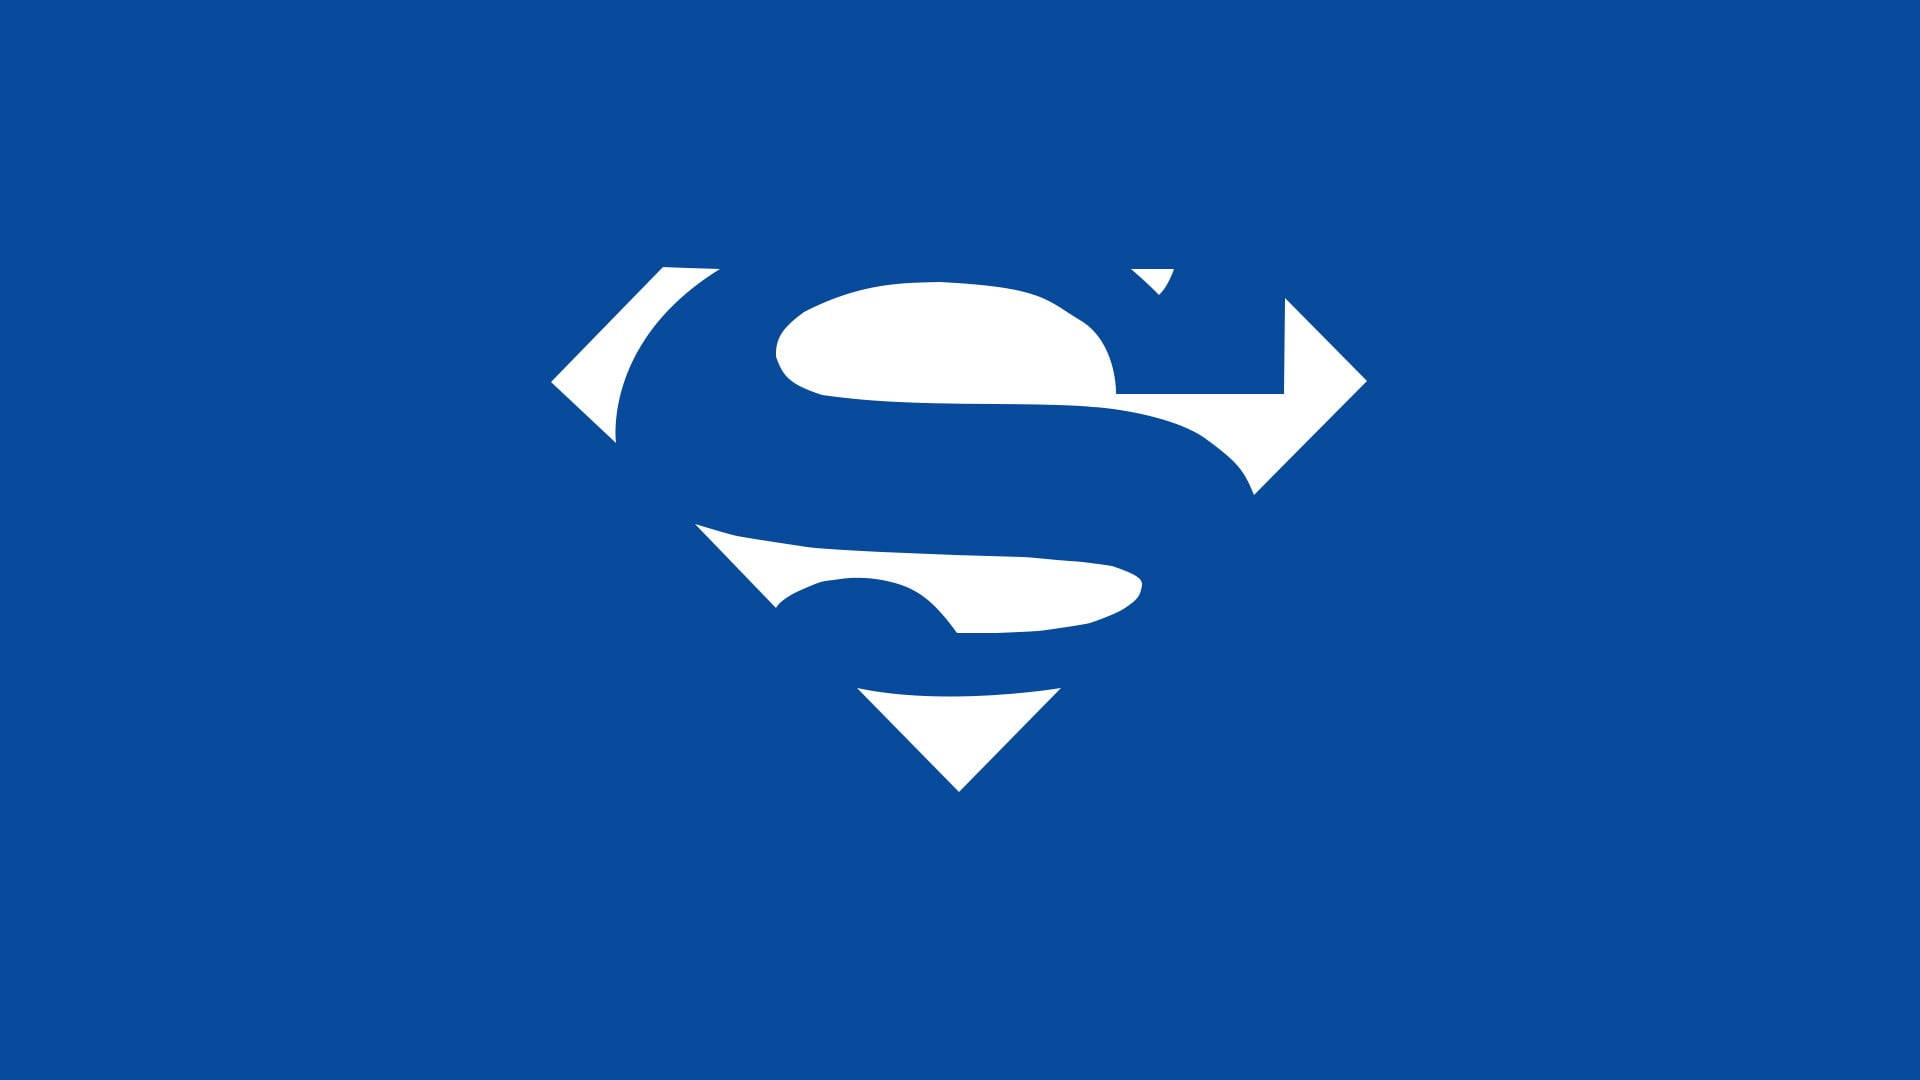 Logodi Superman Minimalista Blu E Bianco. Sfondo